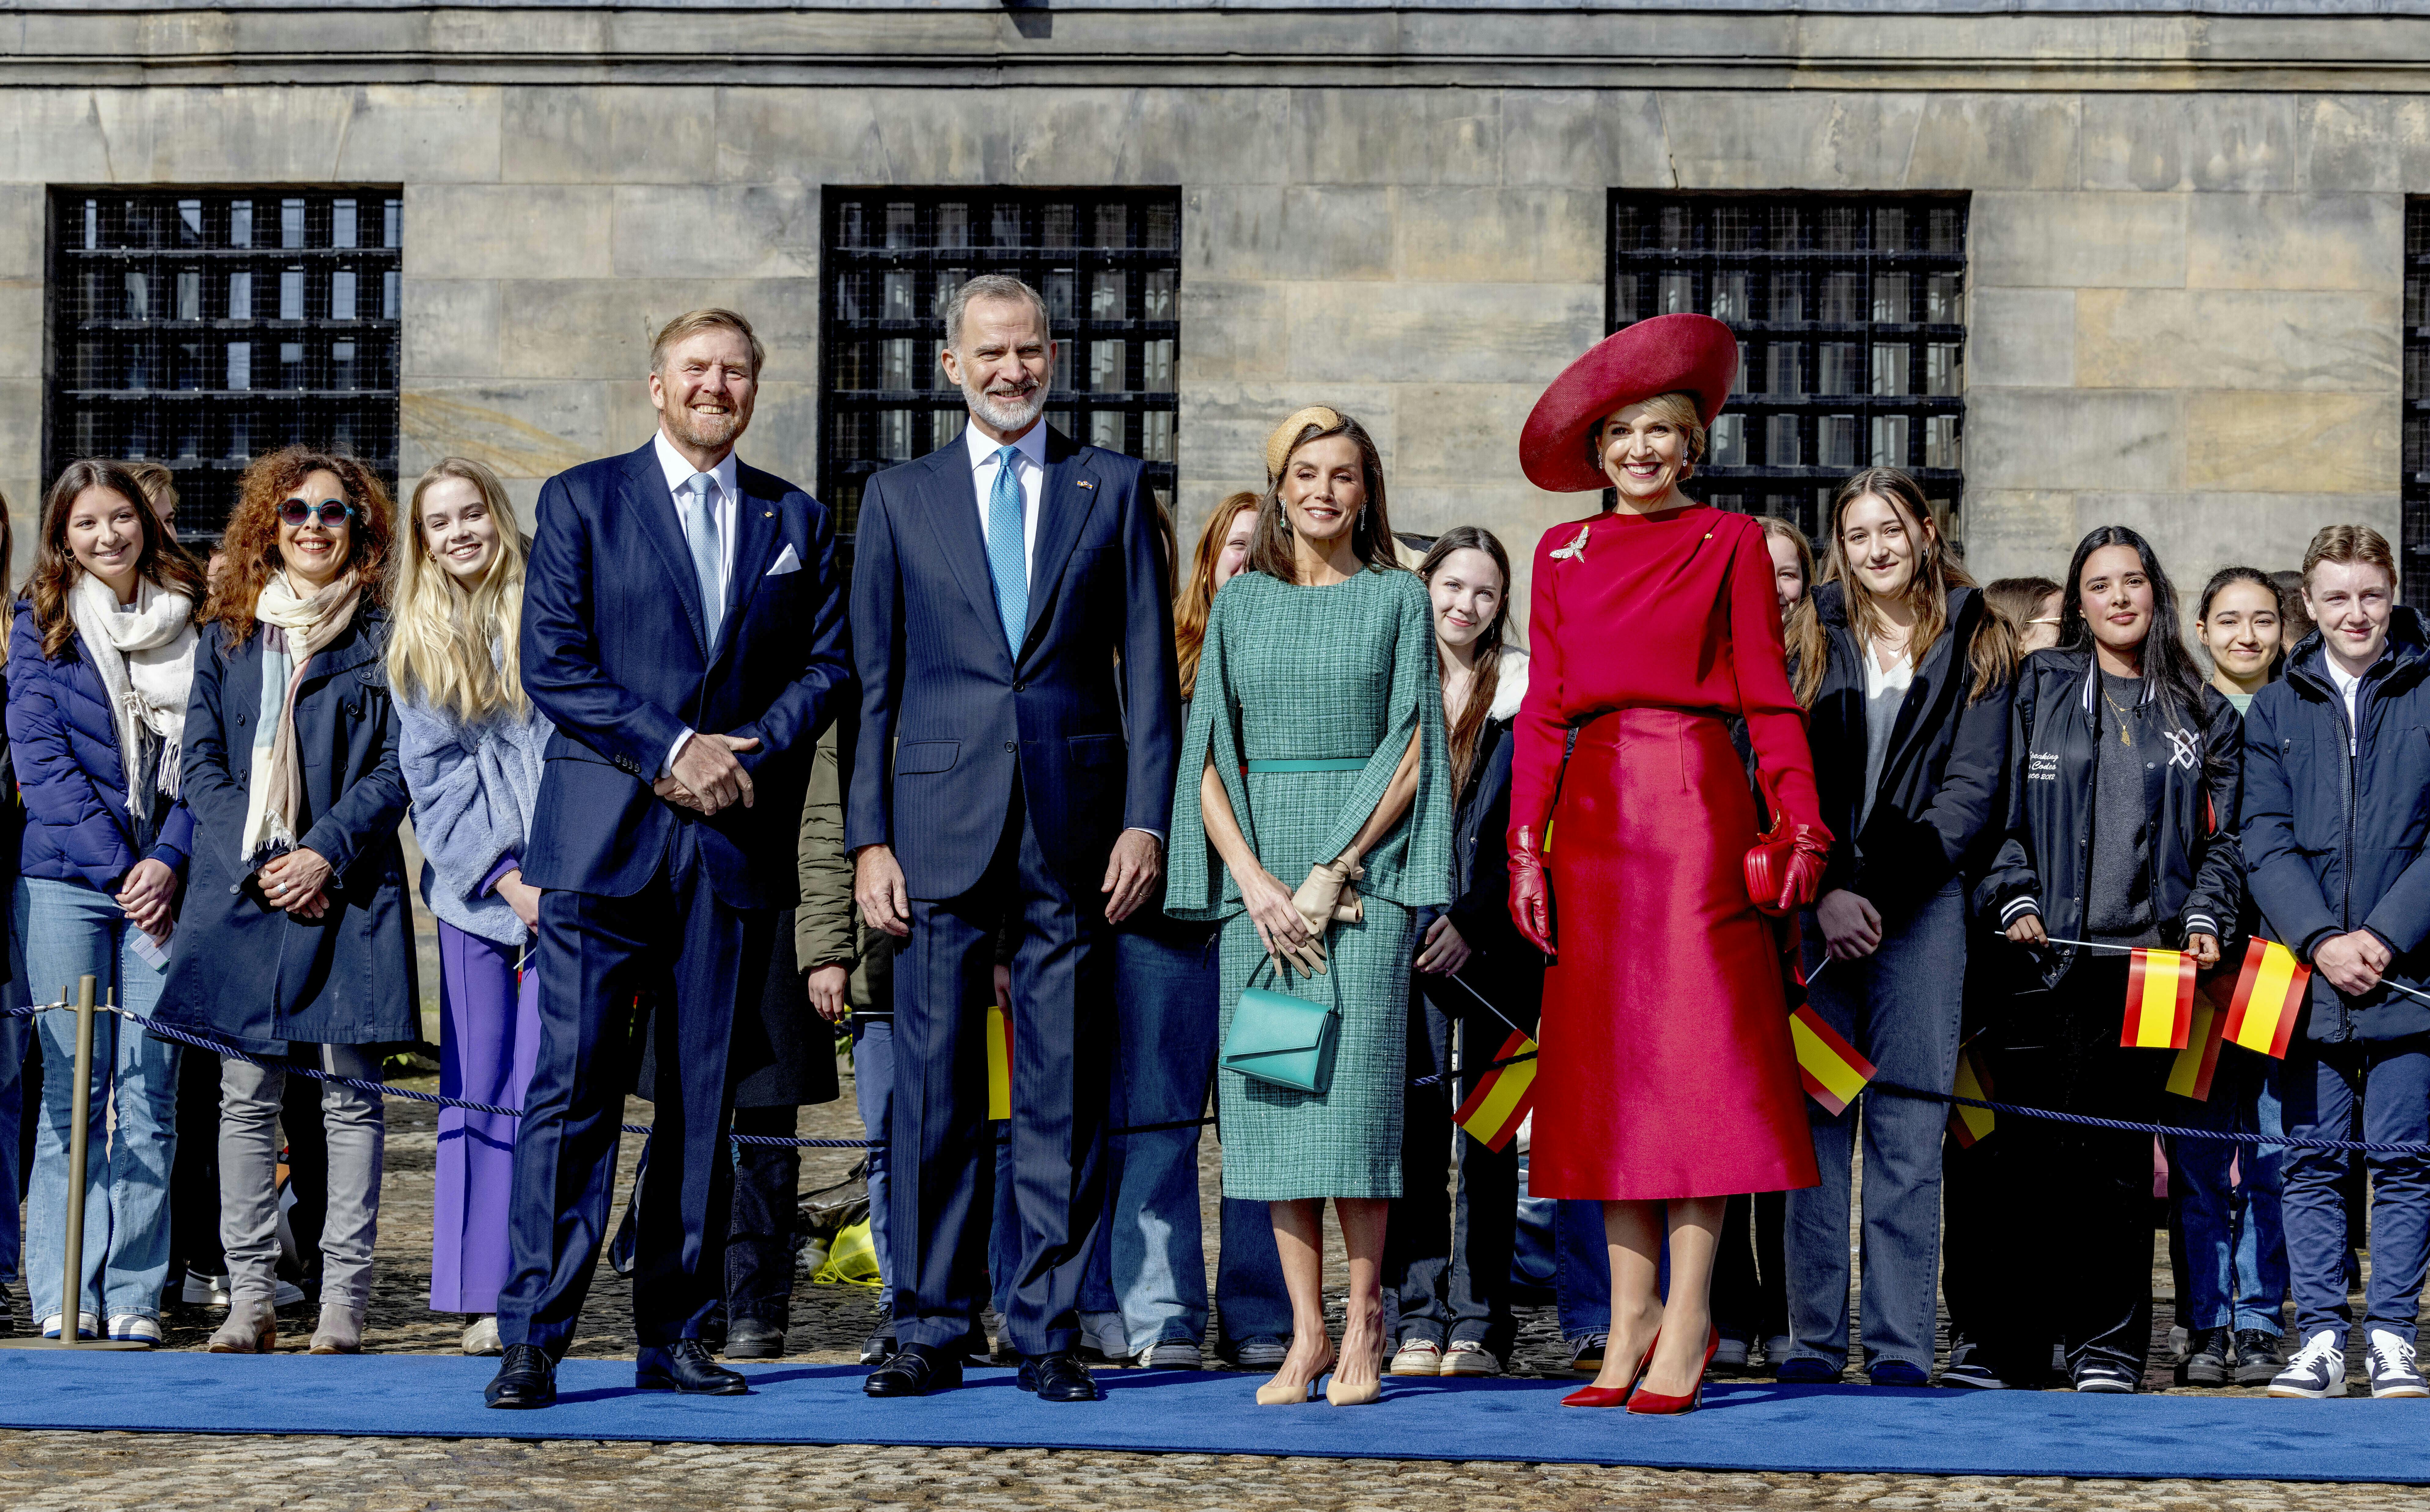 Kong Willem-Alexander og dronning Maxima sammen med kong Felipe og dronning Letizia